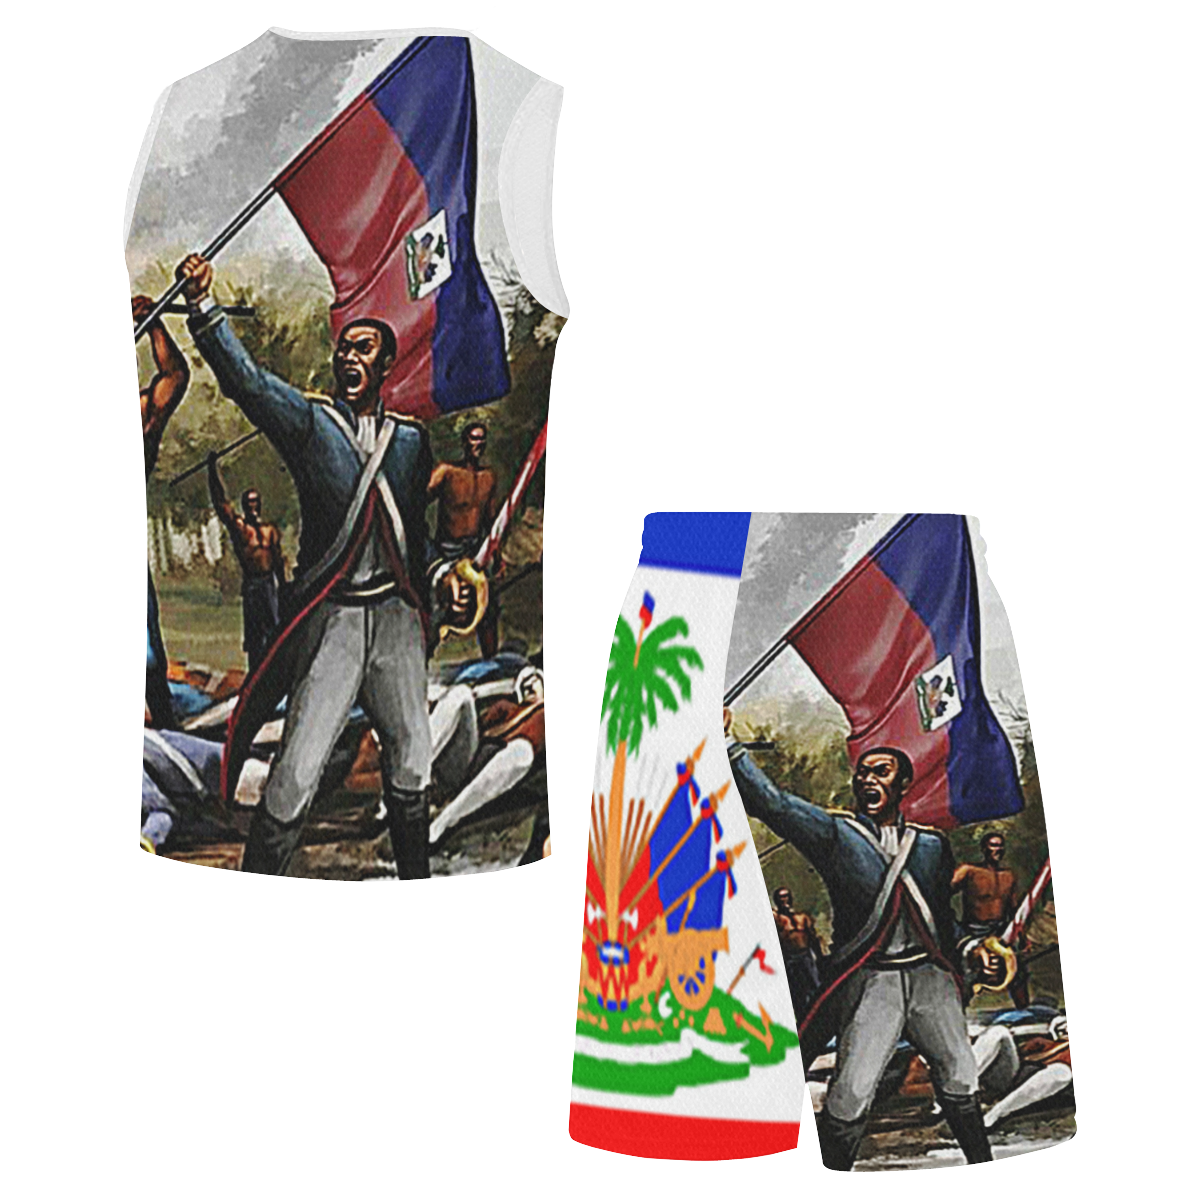 HAITI REVOLUTION All Over Print Basketball Uniform